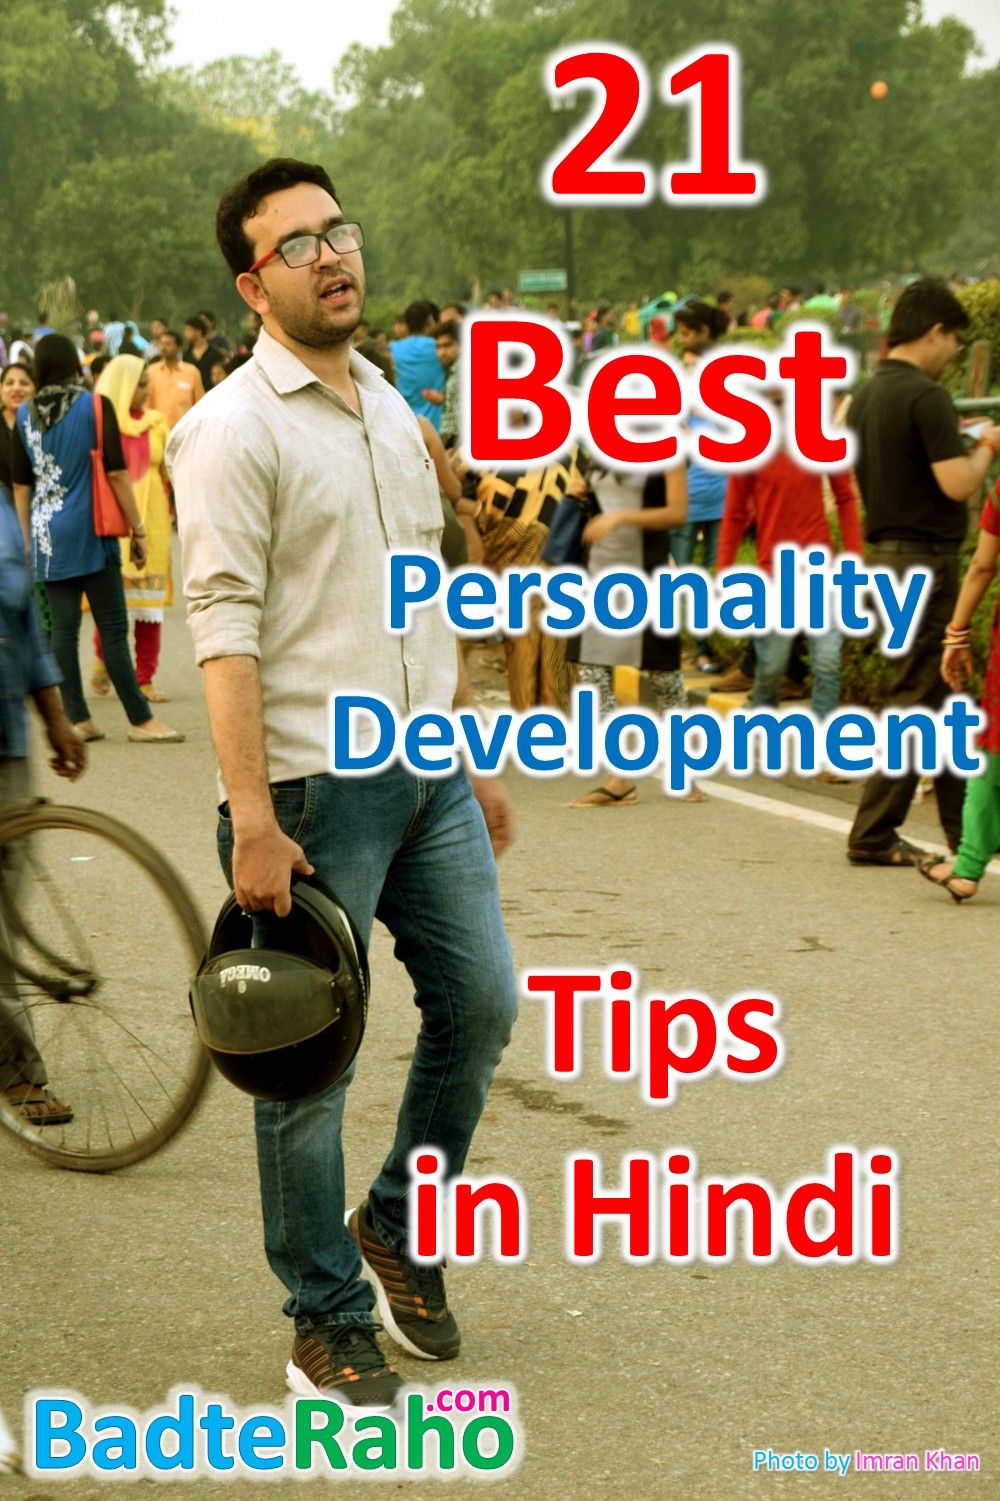 Personality-Development-Tips-Pinterest